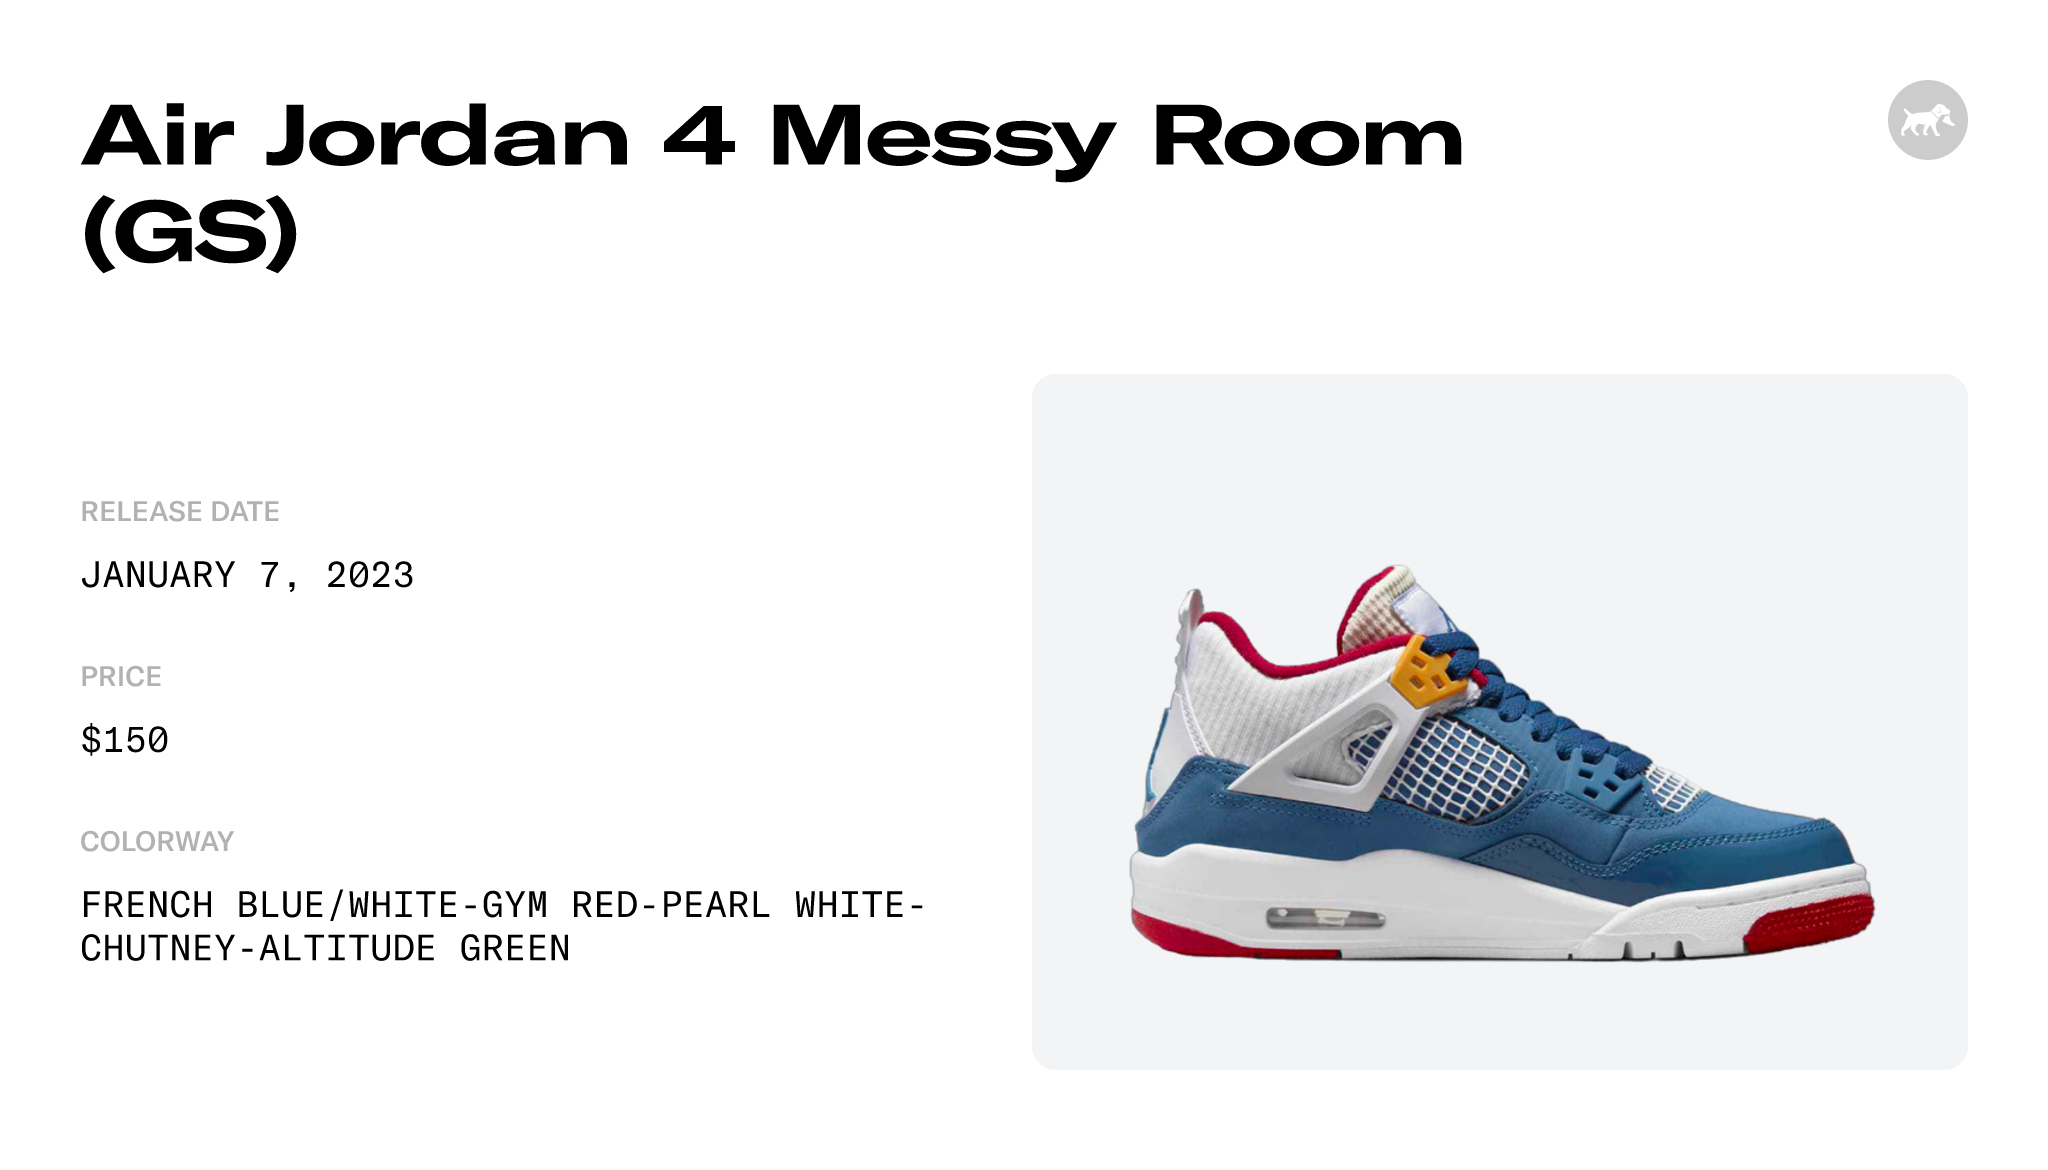 The Air Jordan 4 'Messy Room' Kinda Looks Like a Union